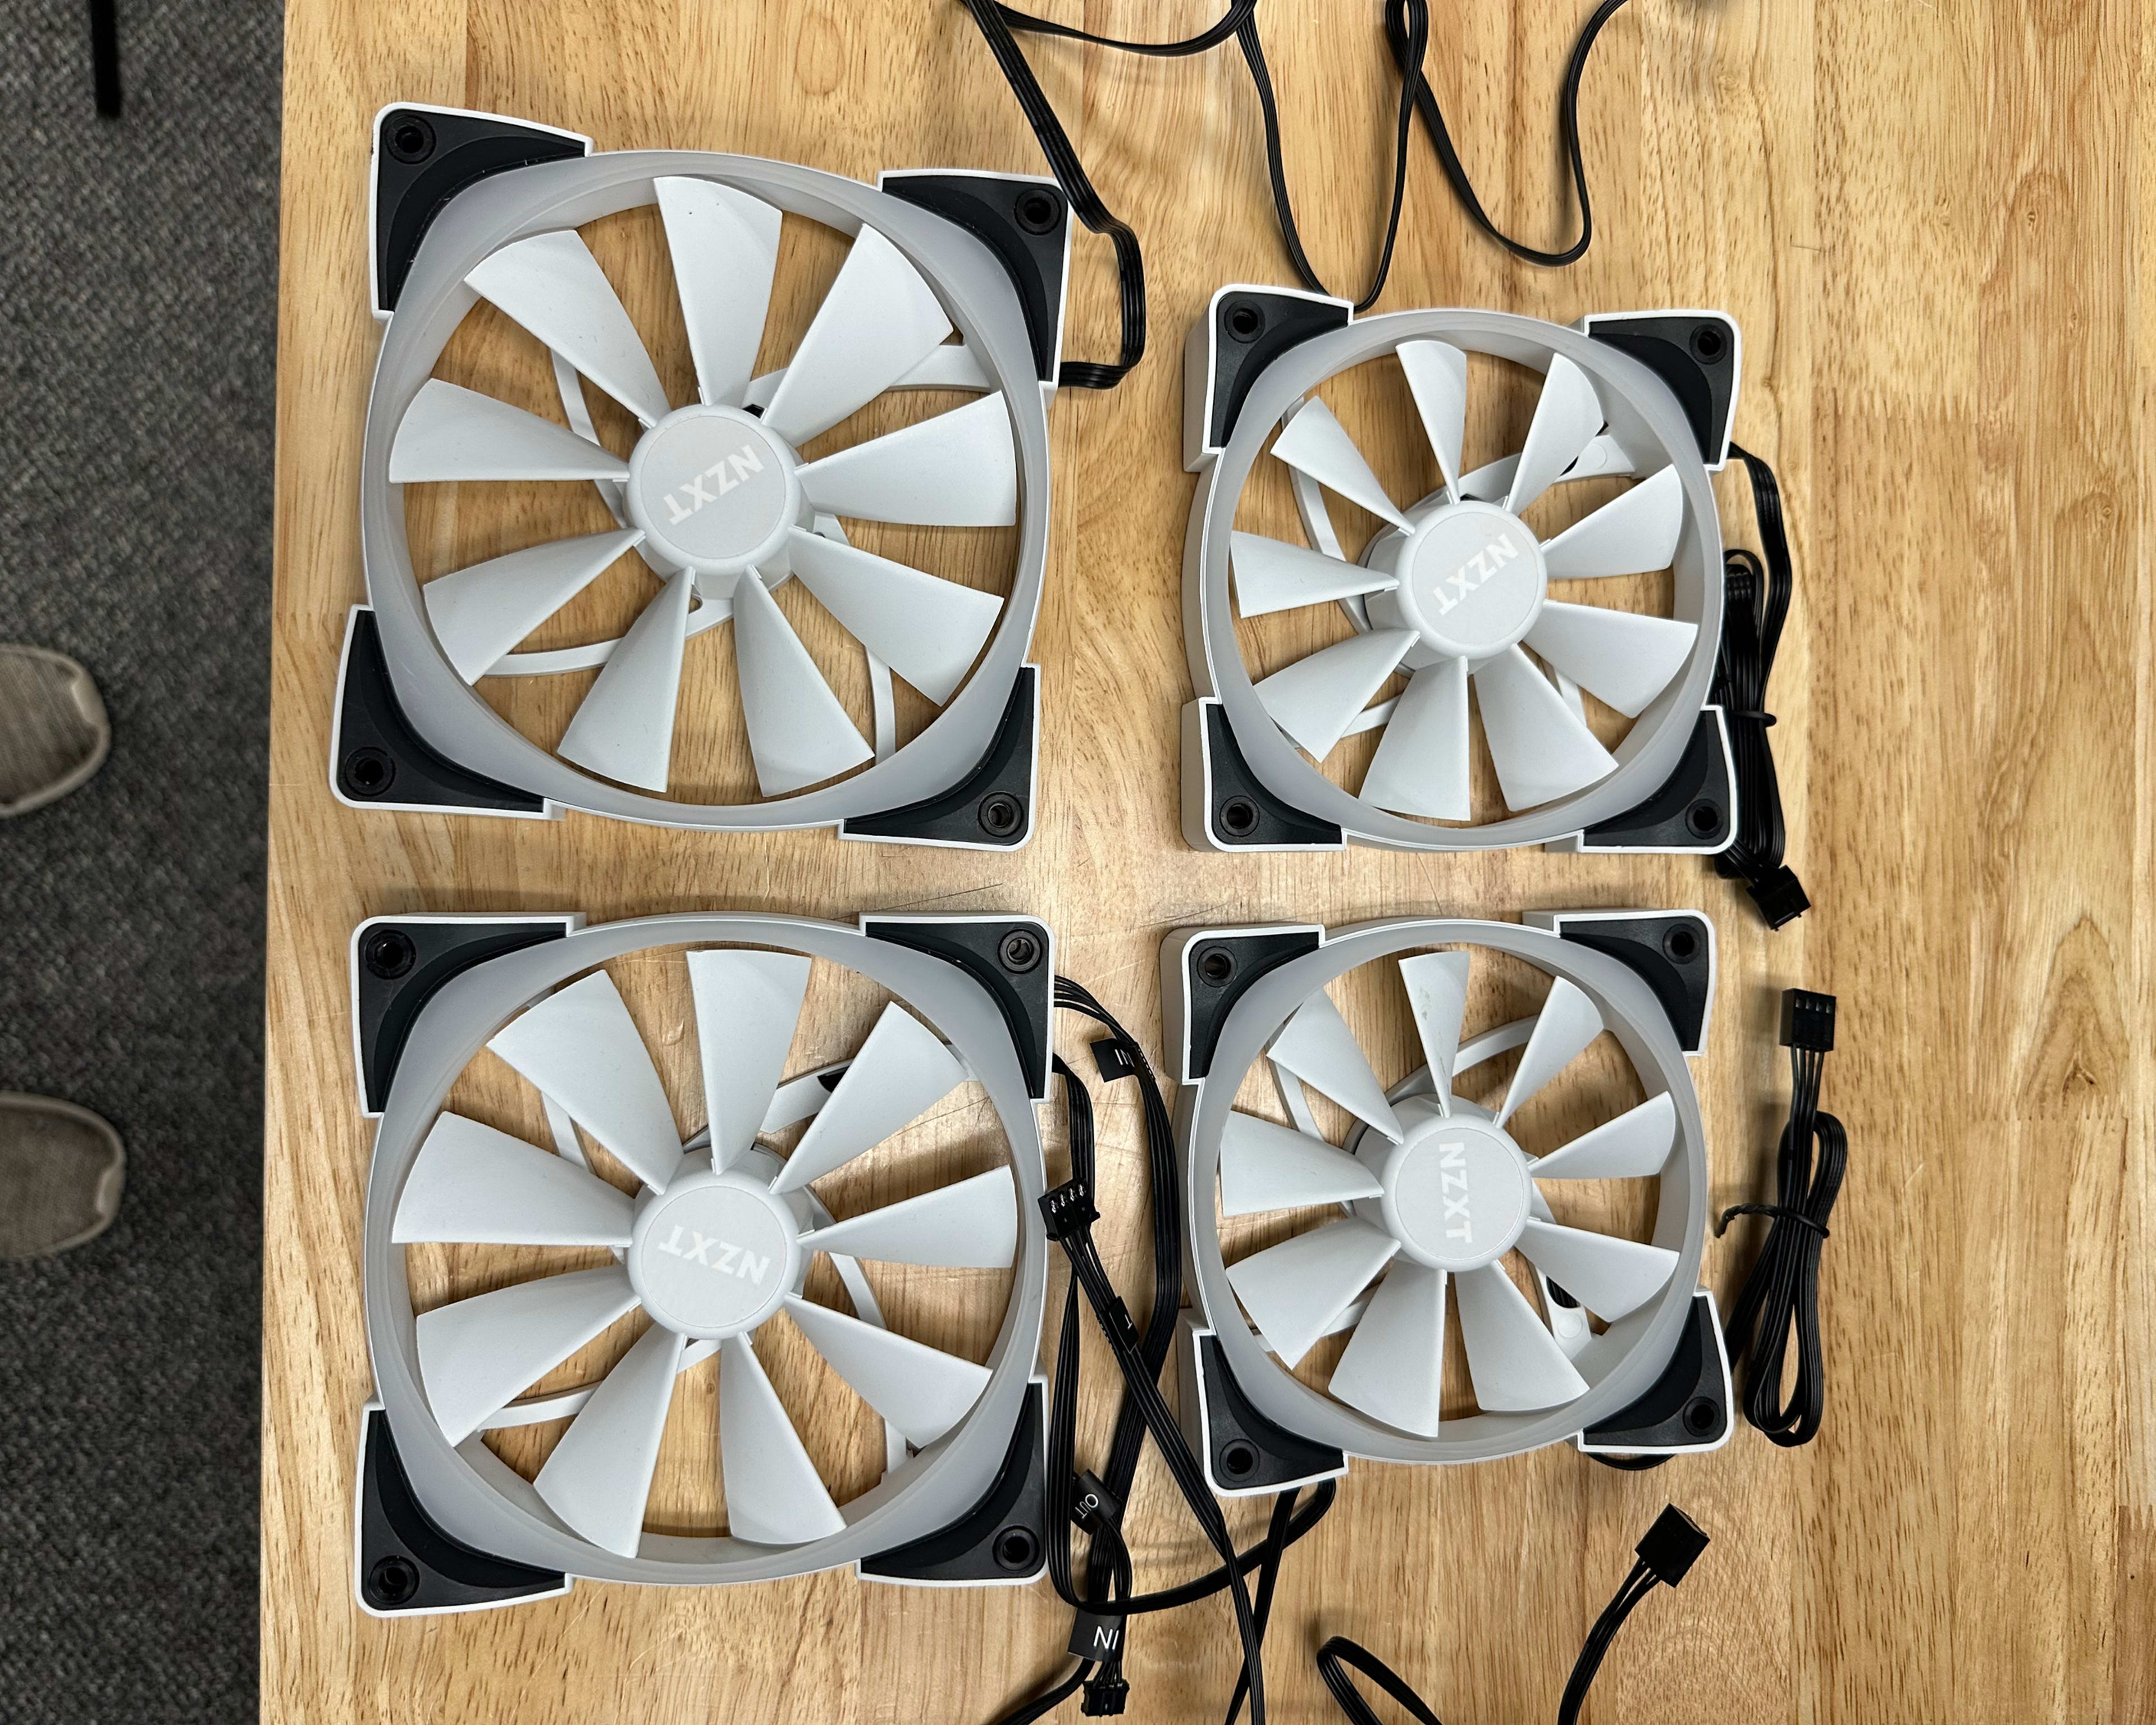 NZXTWhite  RGB fans 2x120mm + 2x140mm